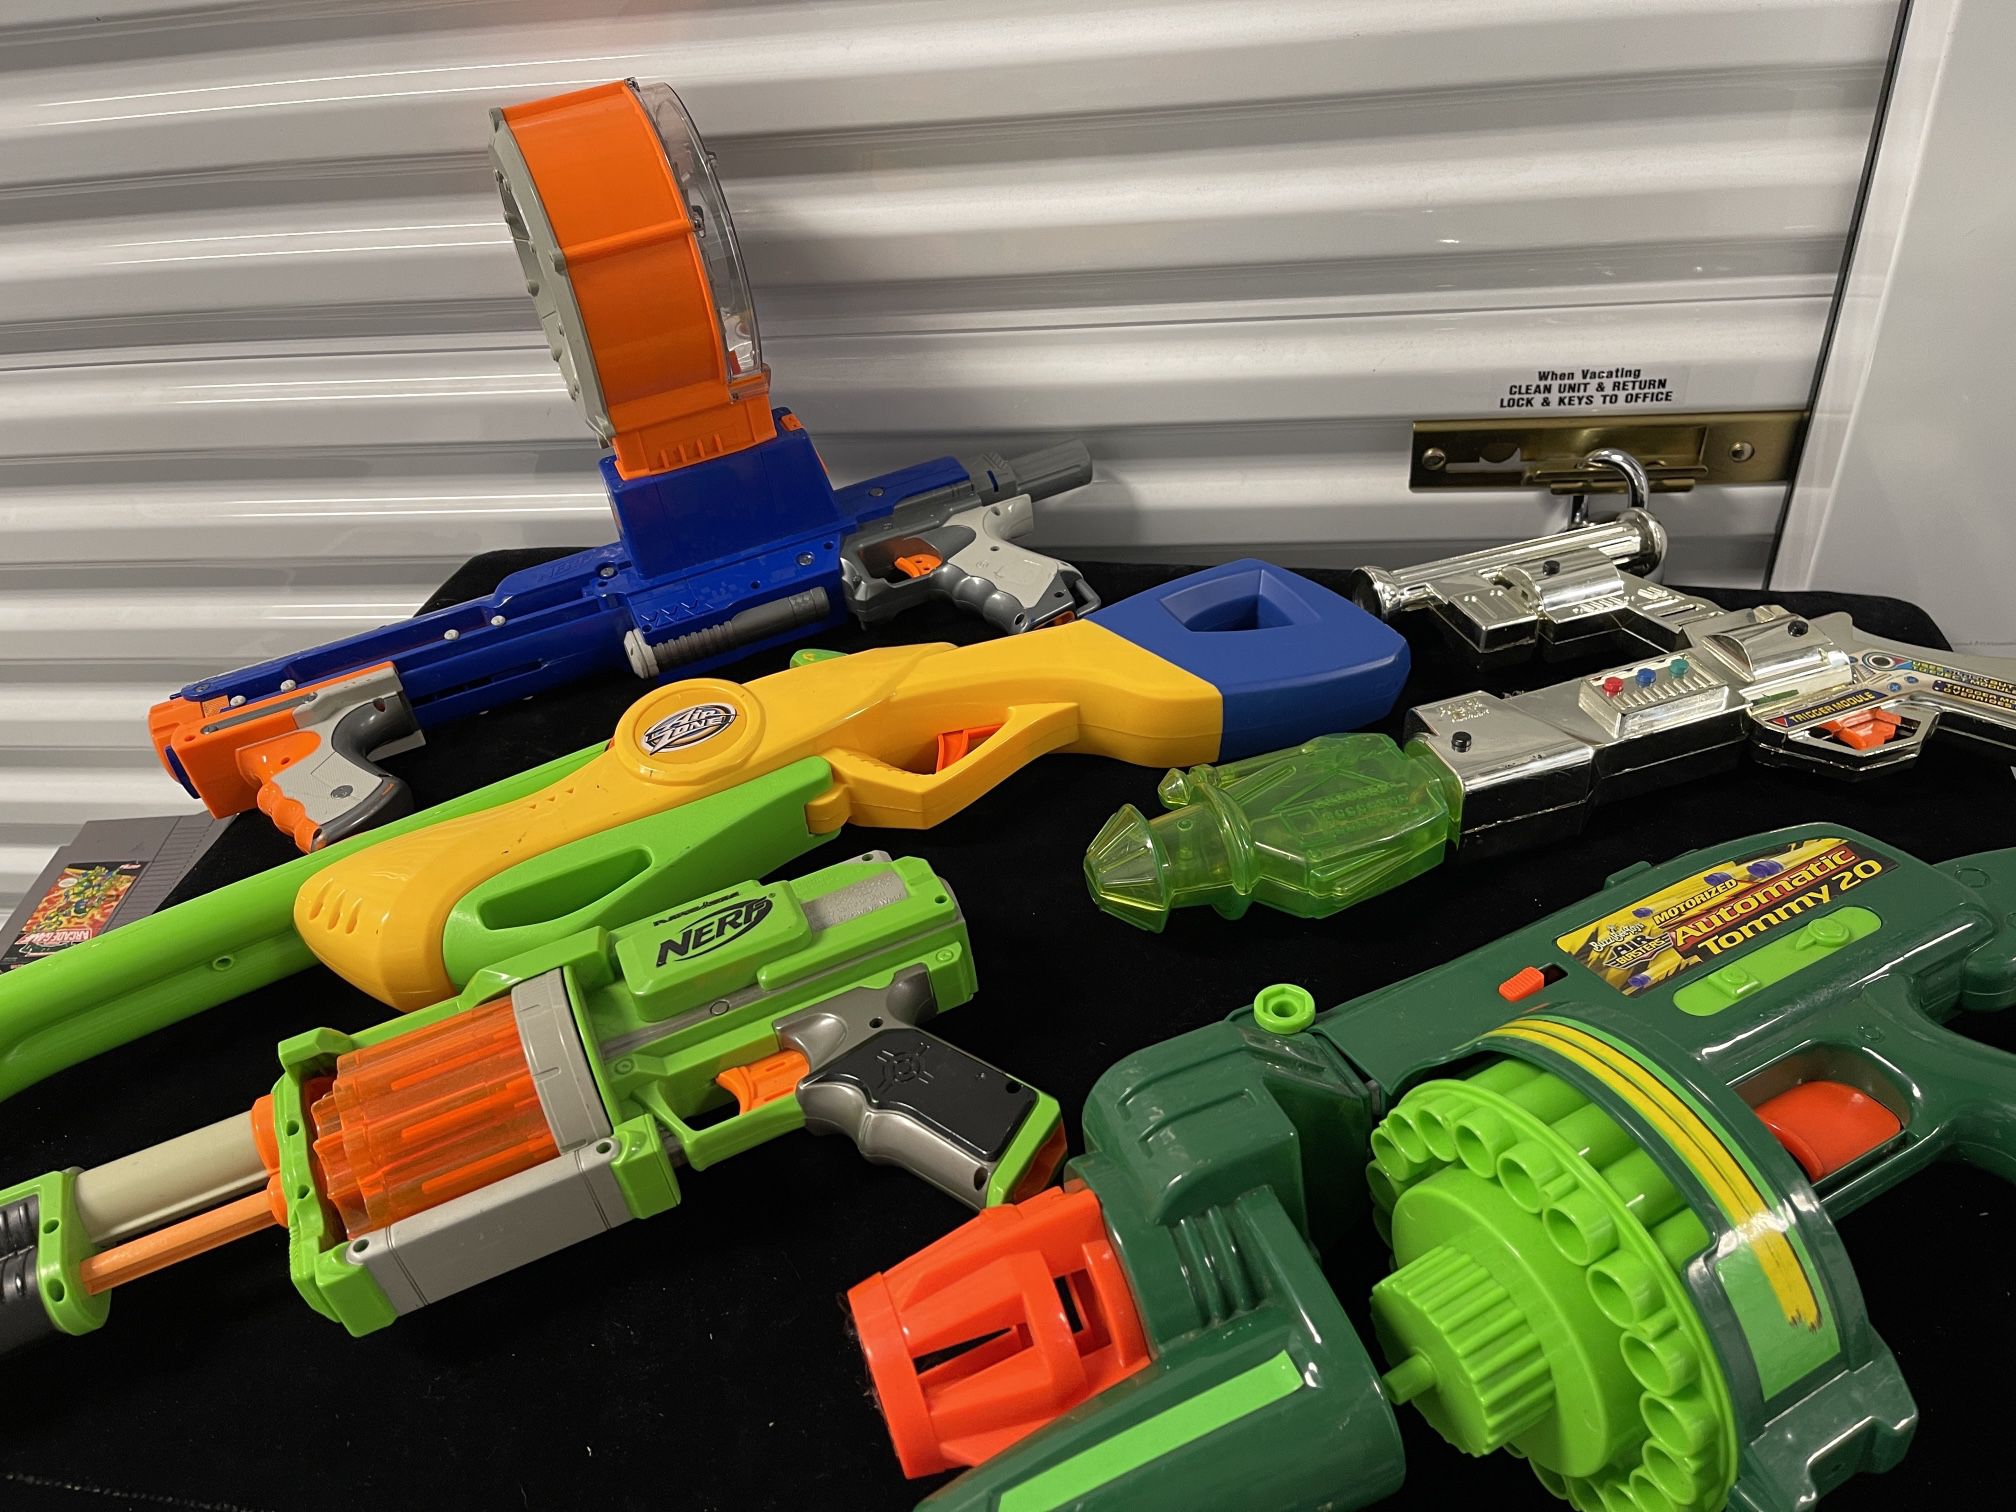 A Lot Of 20 Kids Toy Guns